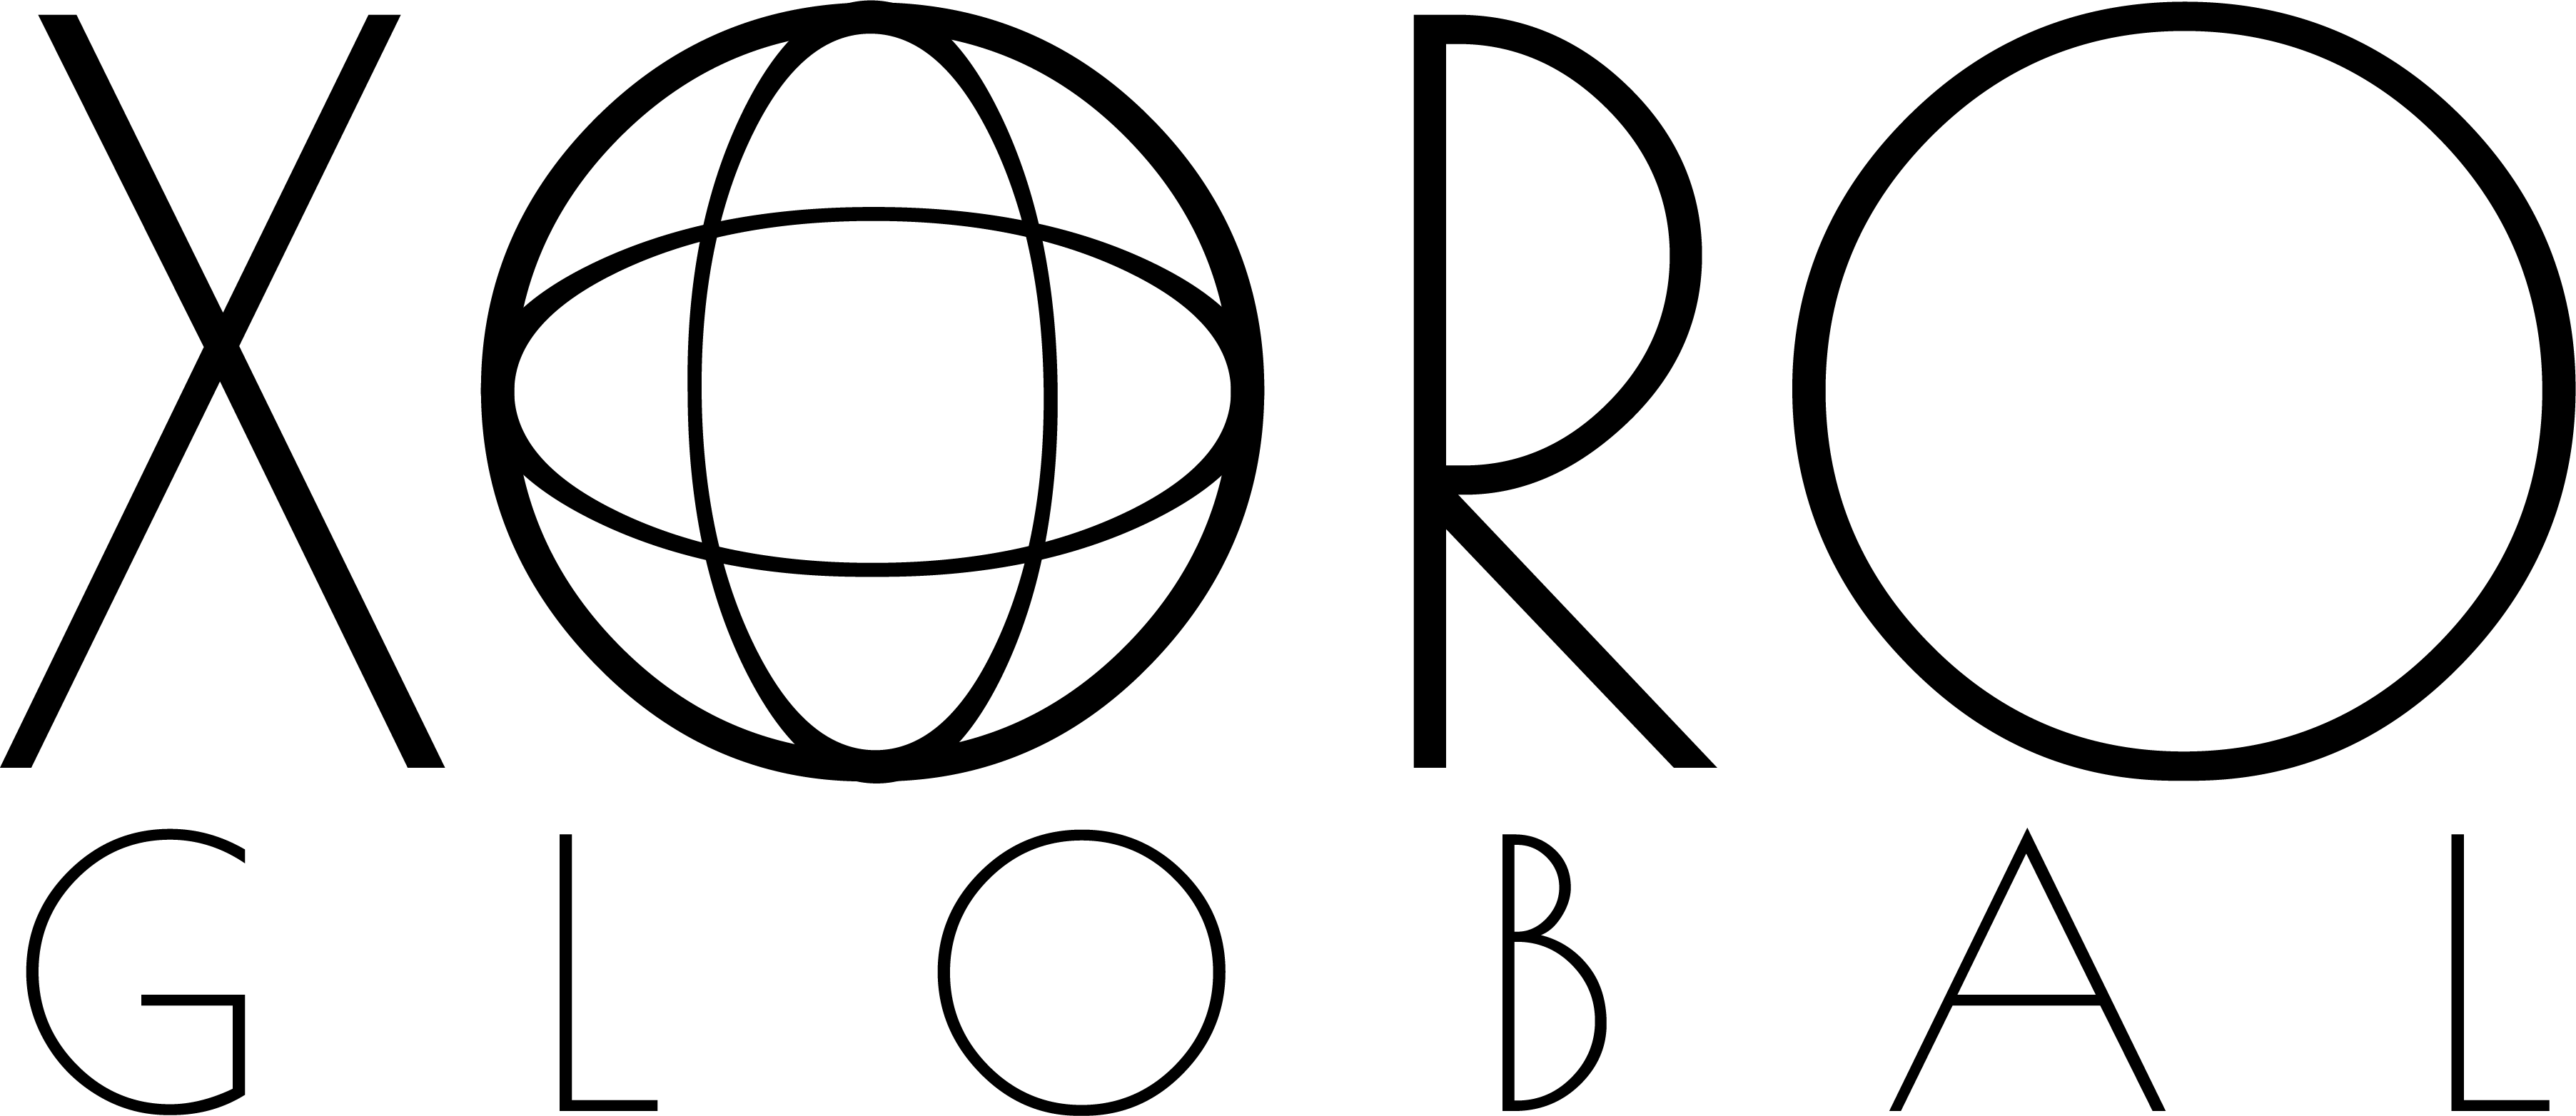 XORO GLOBAL LLC